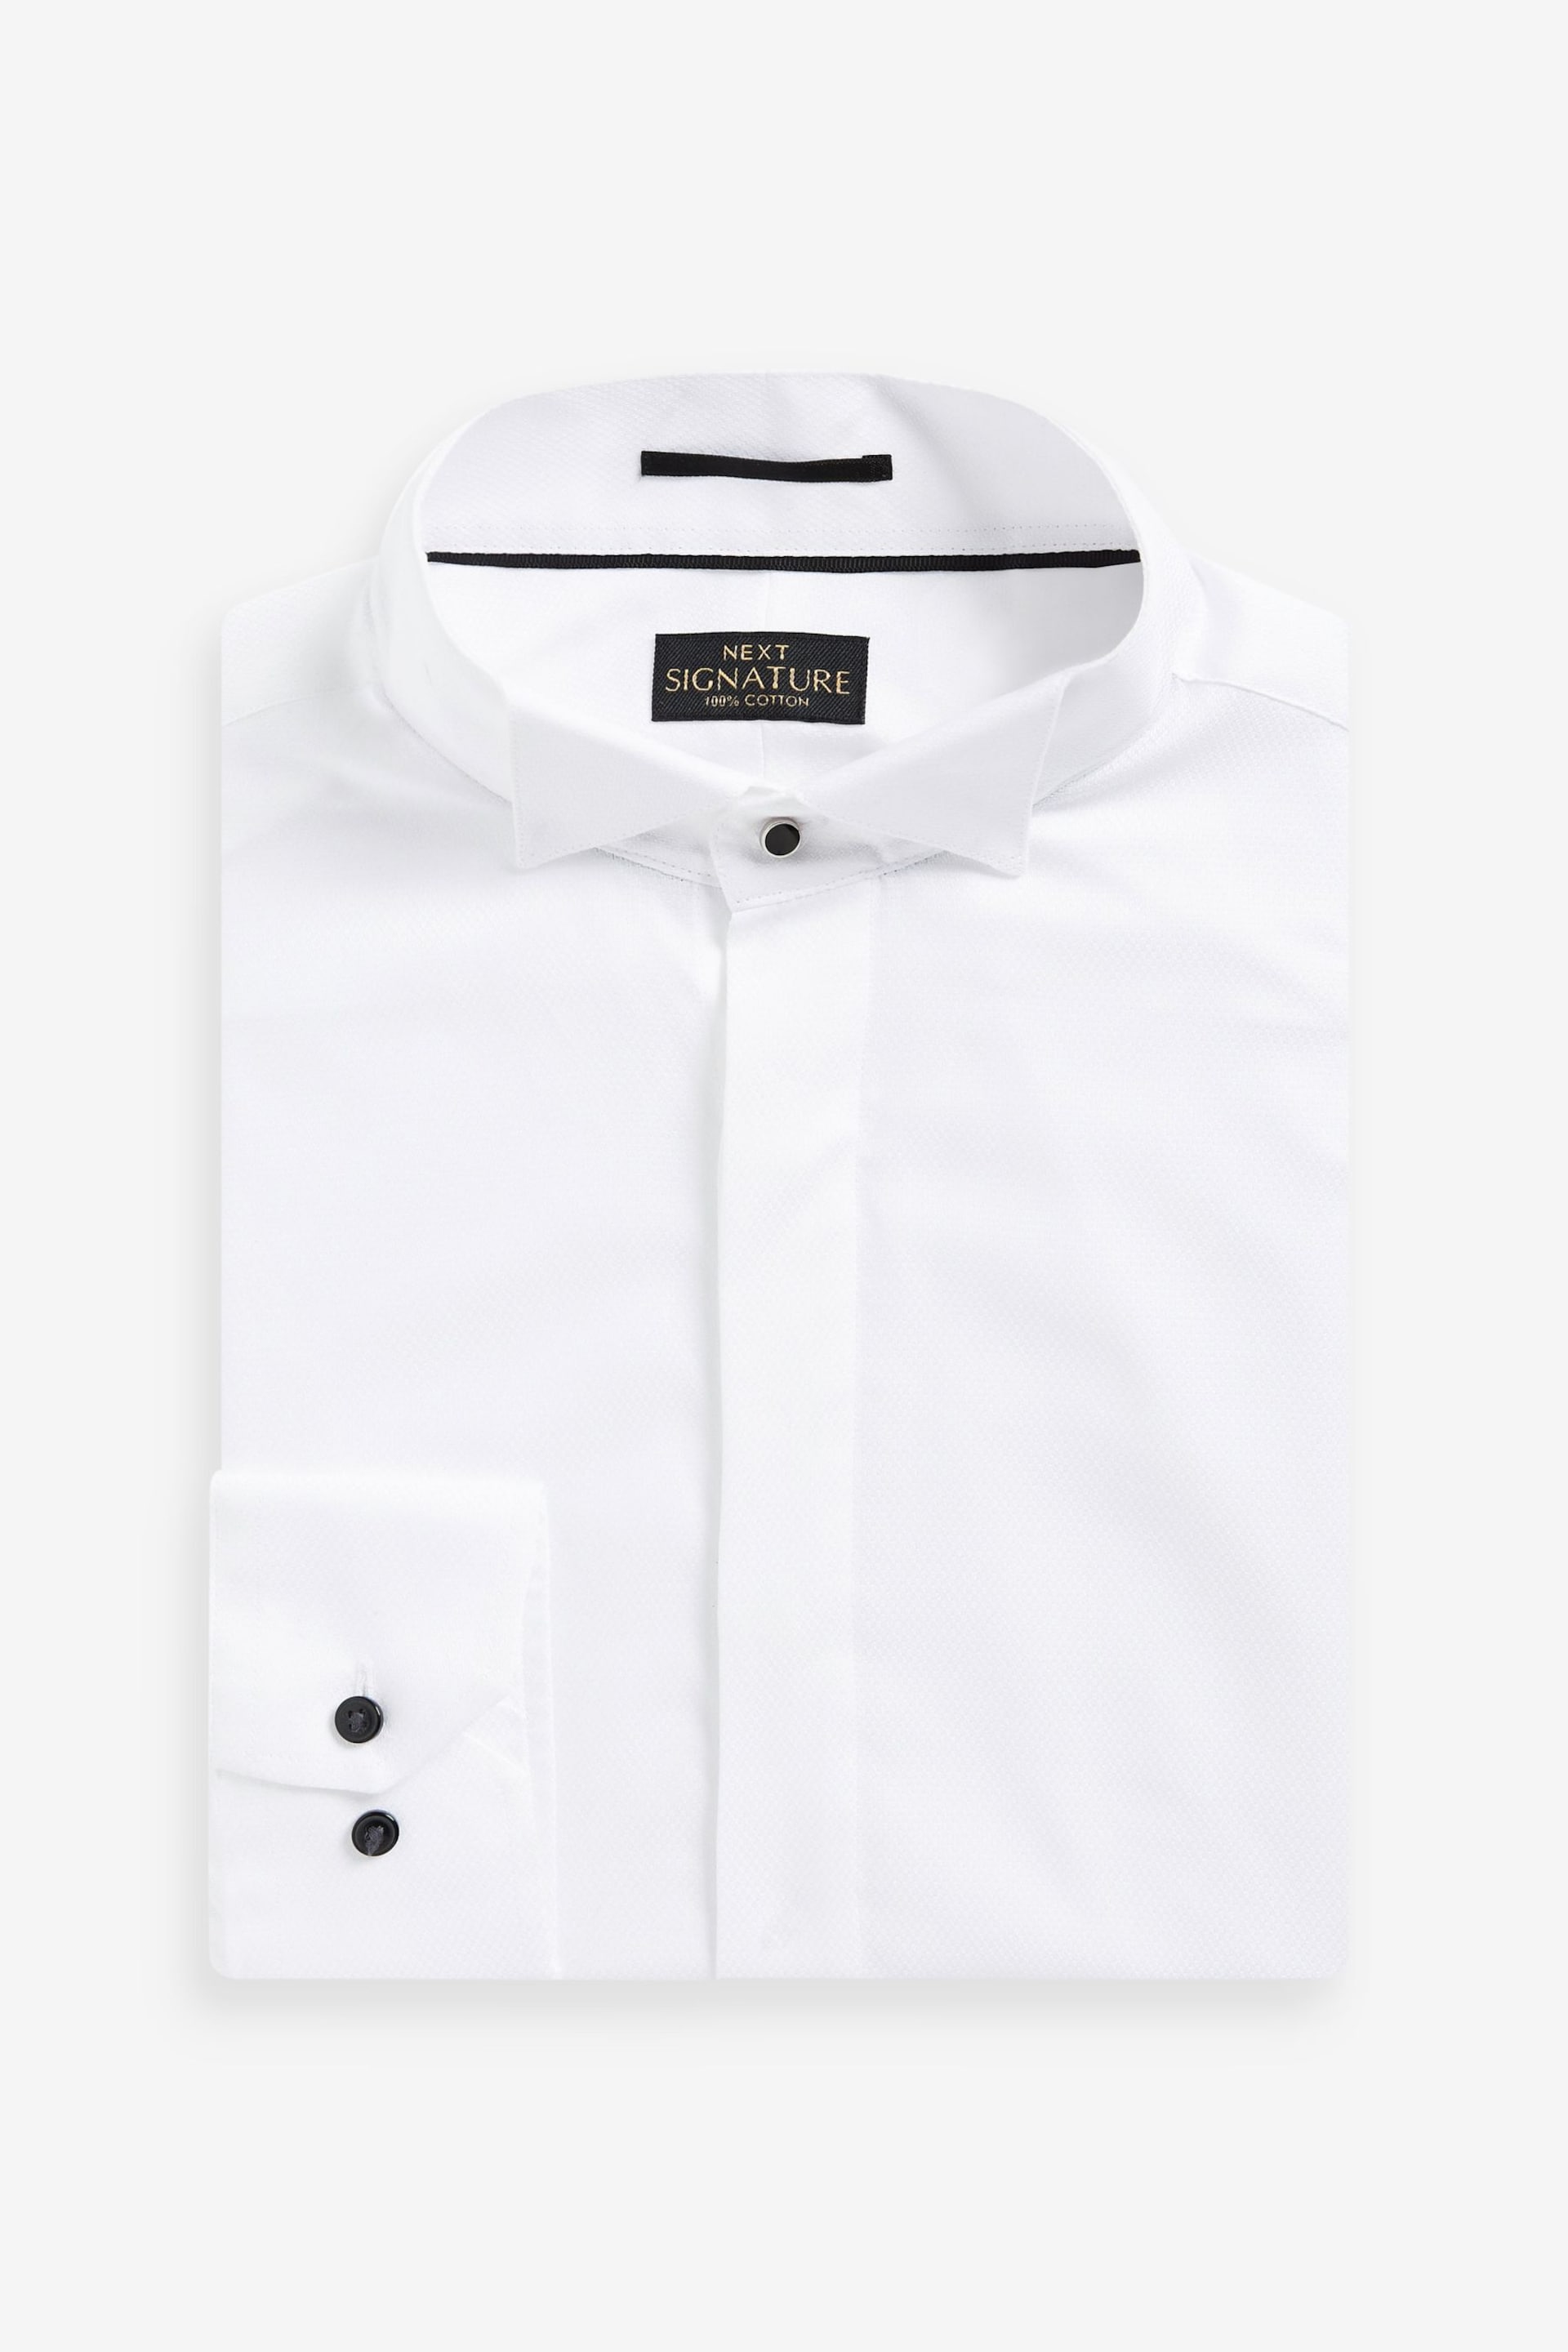 White Wing Collar Signature Textured Single Cuff Dress Shirt - Image 3 of 4